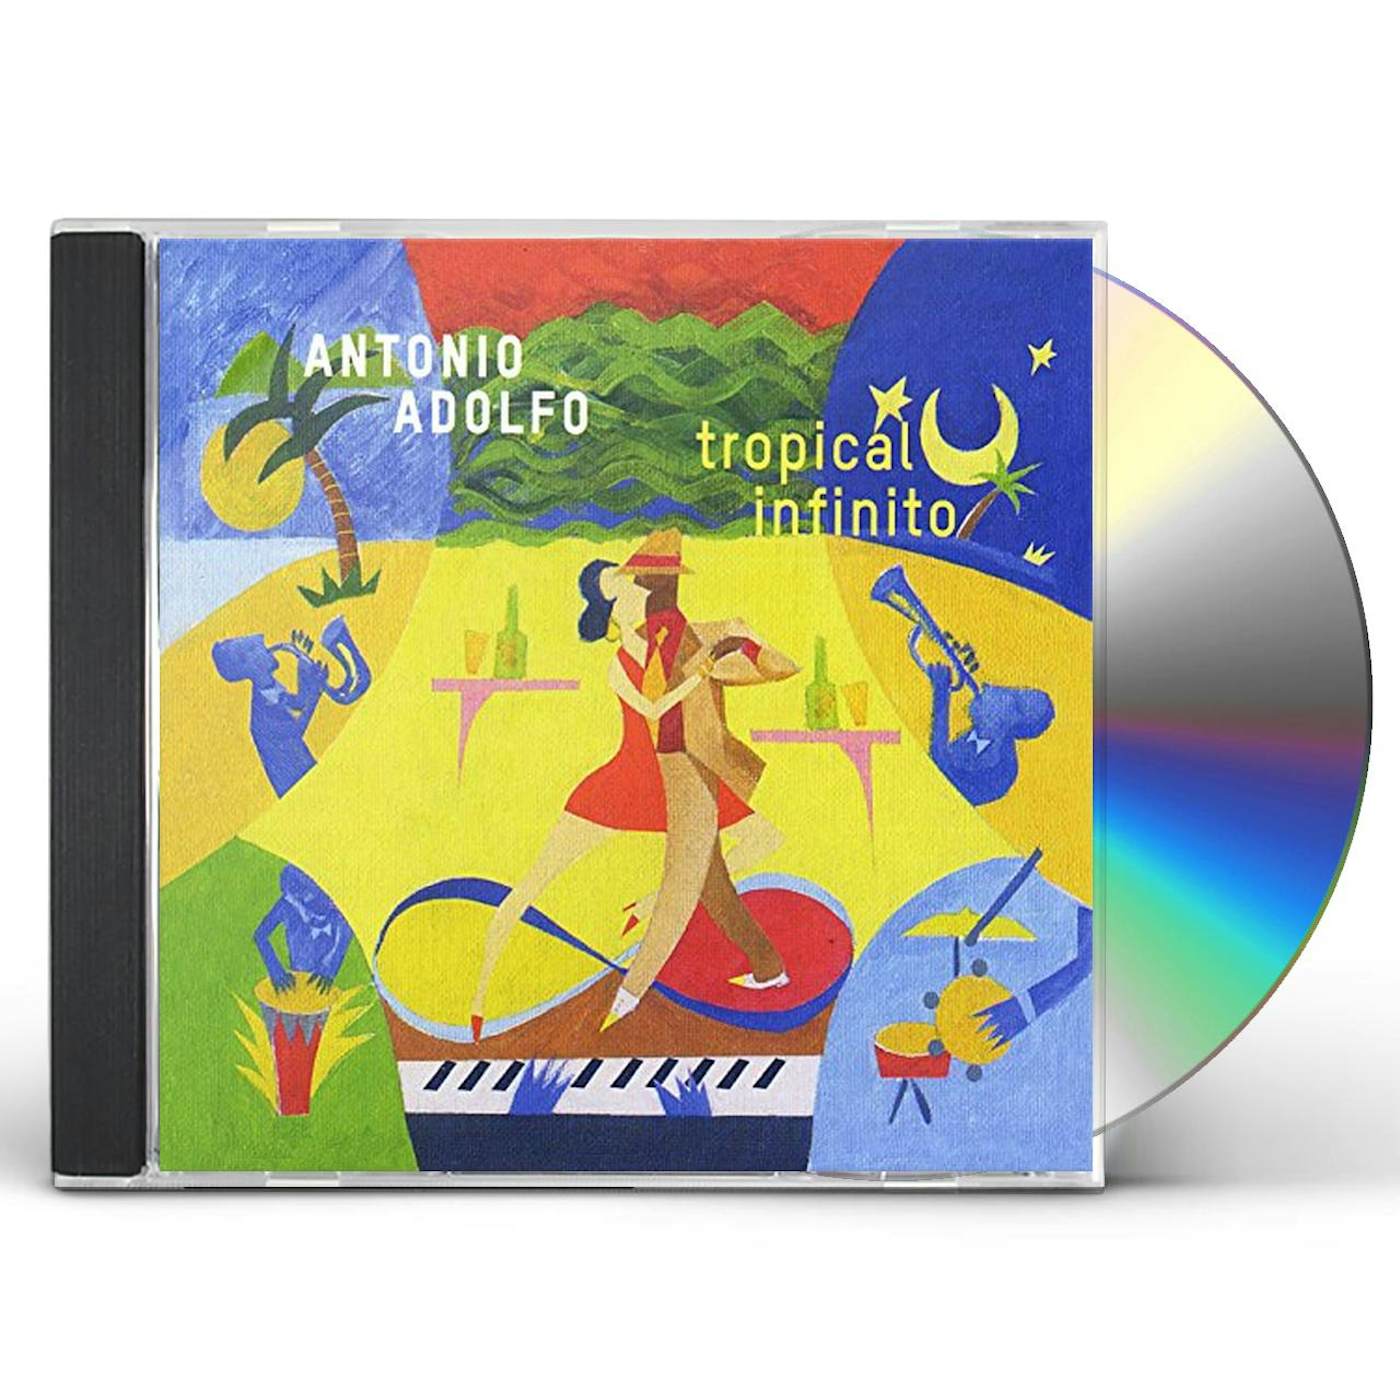 Antonio Adolfo TROPICAL INFINITO CD